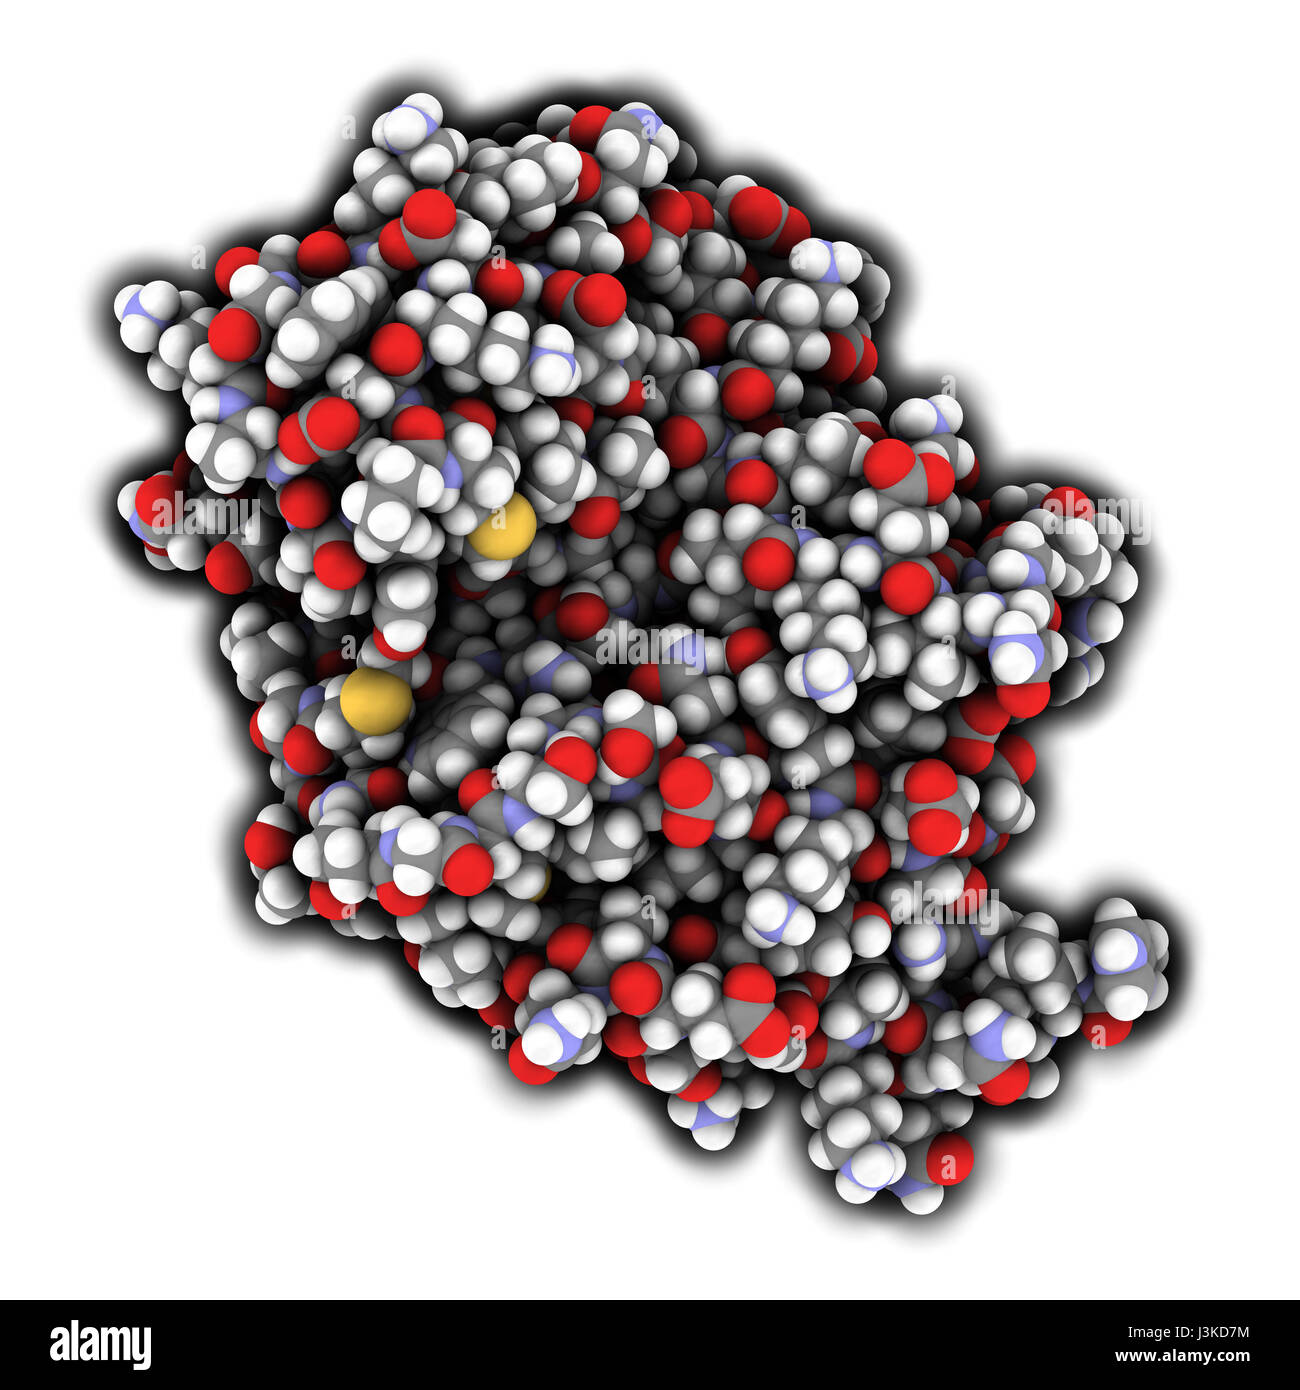 Carbapenemase carbapenem antibiotic resistance enzyme. Carbapenemase OXA-24 from the bacterium Acinetobacter baumannii. Atoms shown as color-coded sph Stock Photo